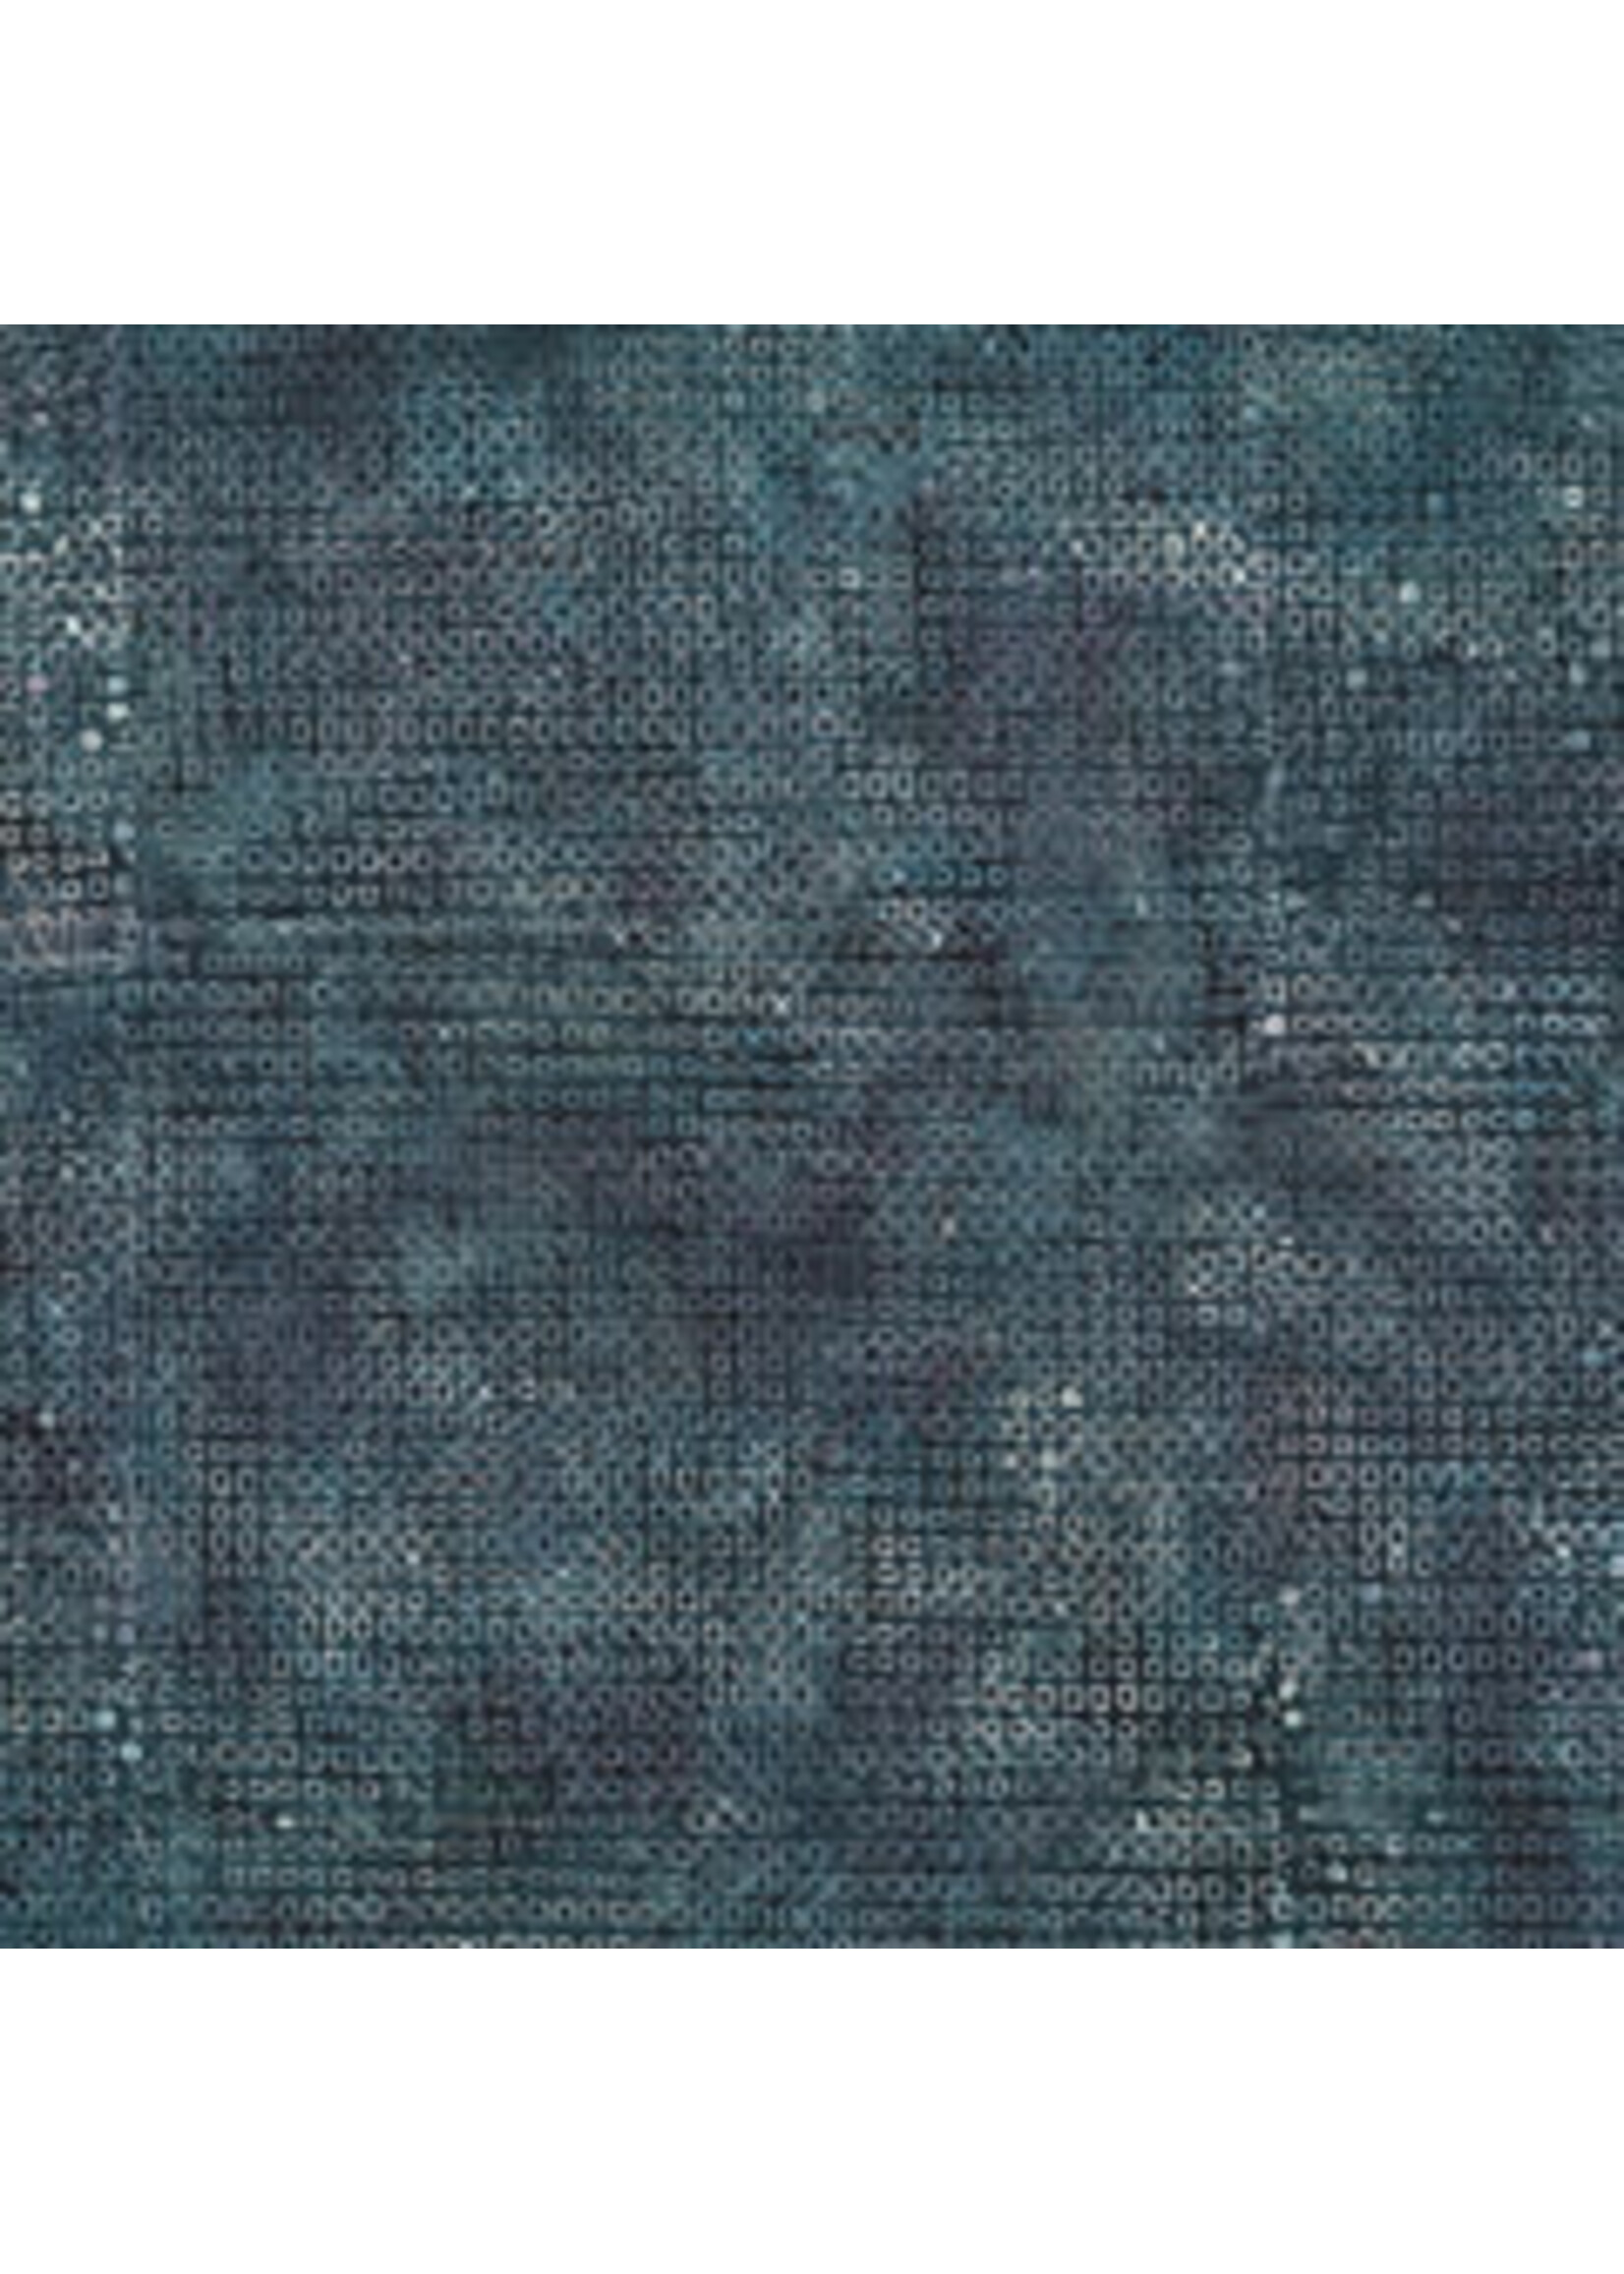 Hoffman Fabrics Bali Batik Shibori - Charcoal - Coupon - 100 cm x 110 cm